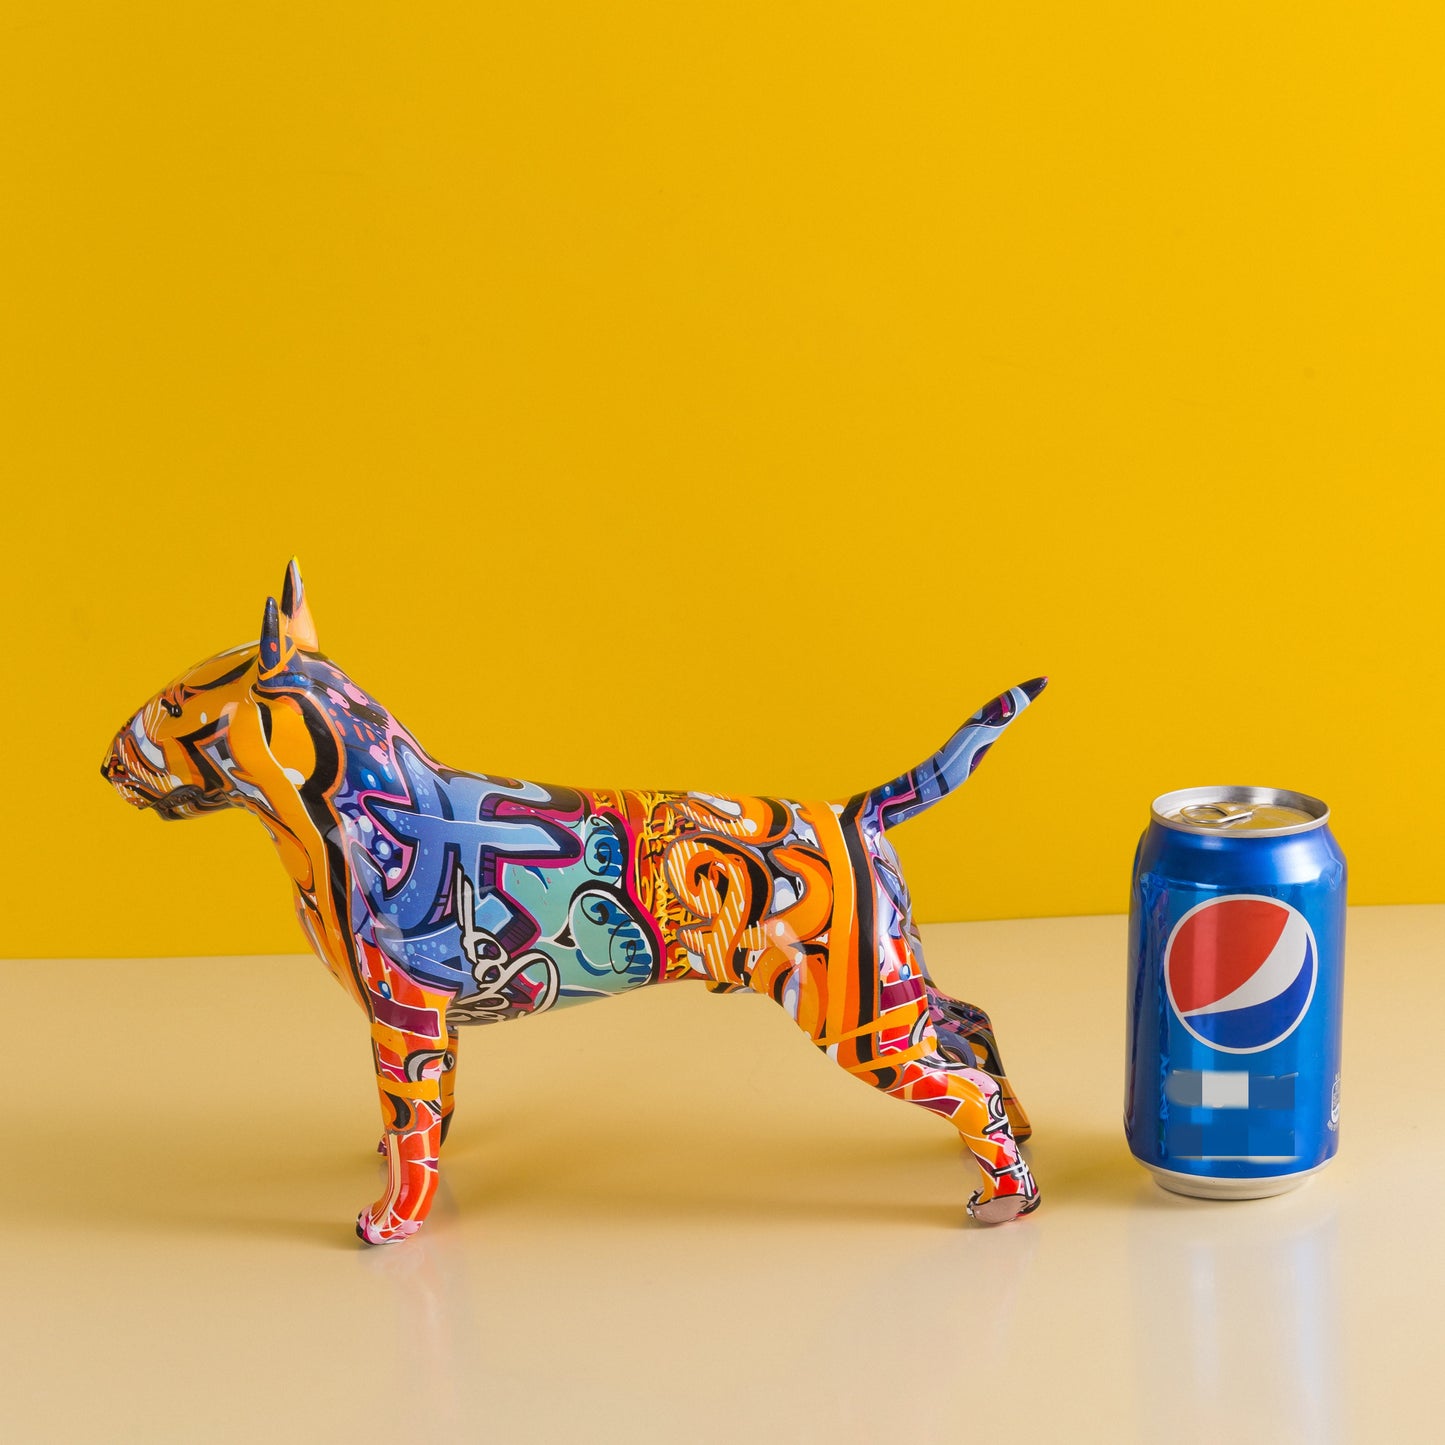 Graffiti Painted Bull Terrier Dog Art Sculpture